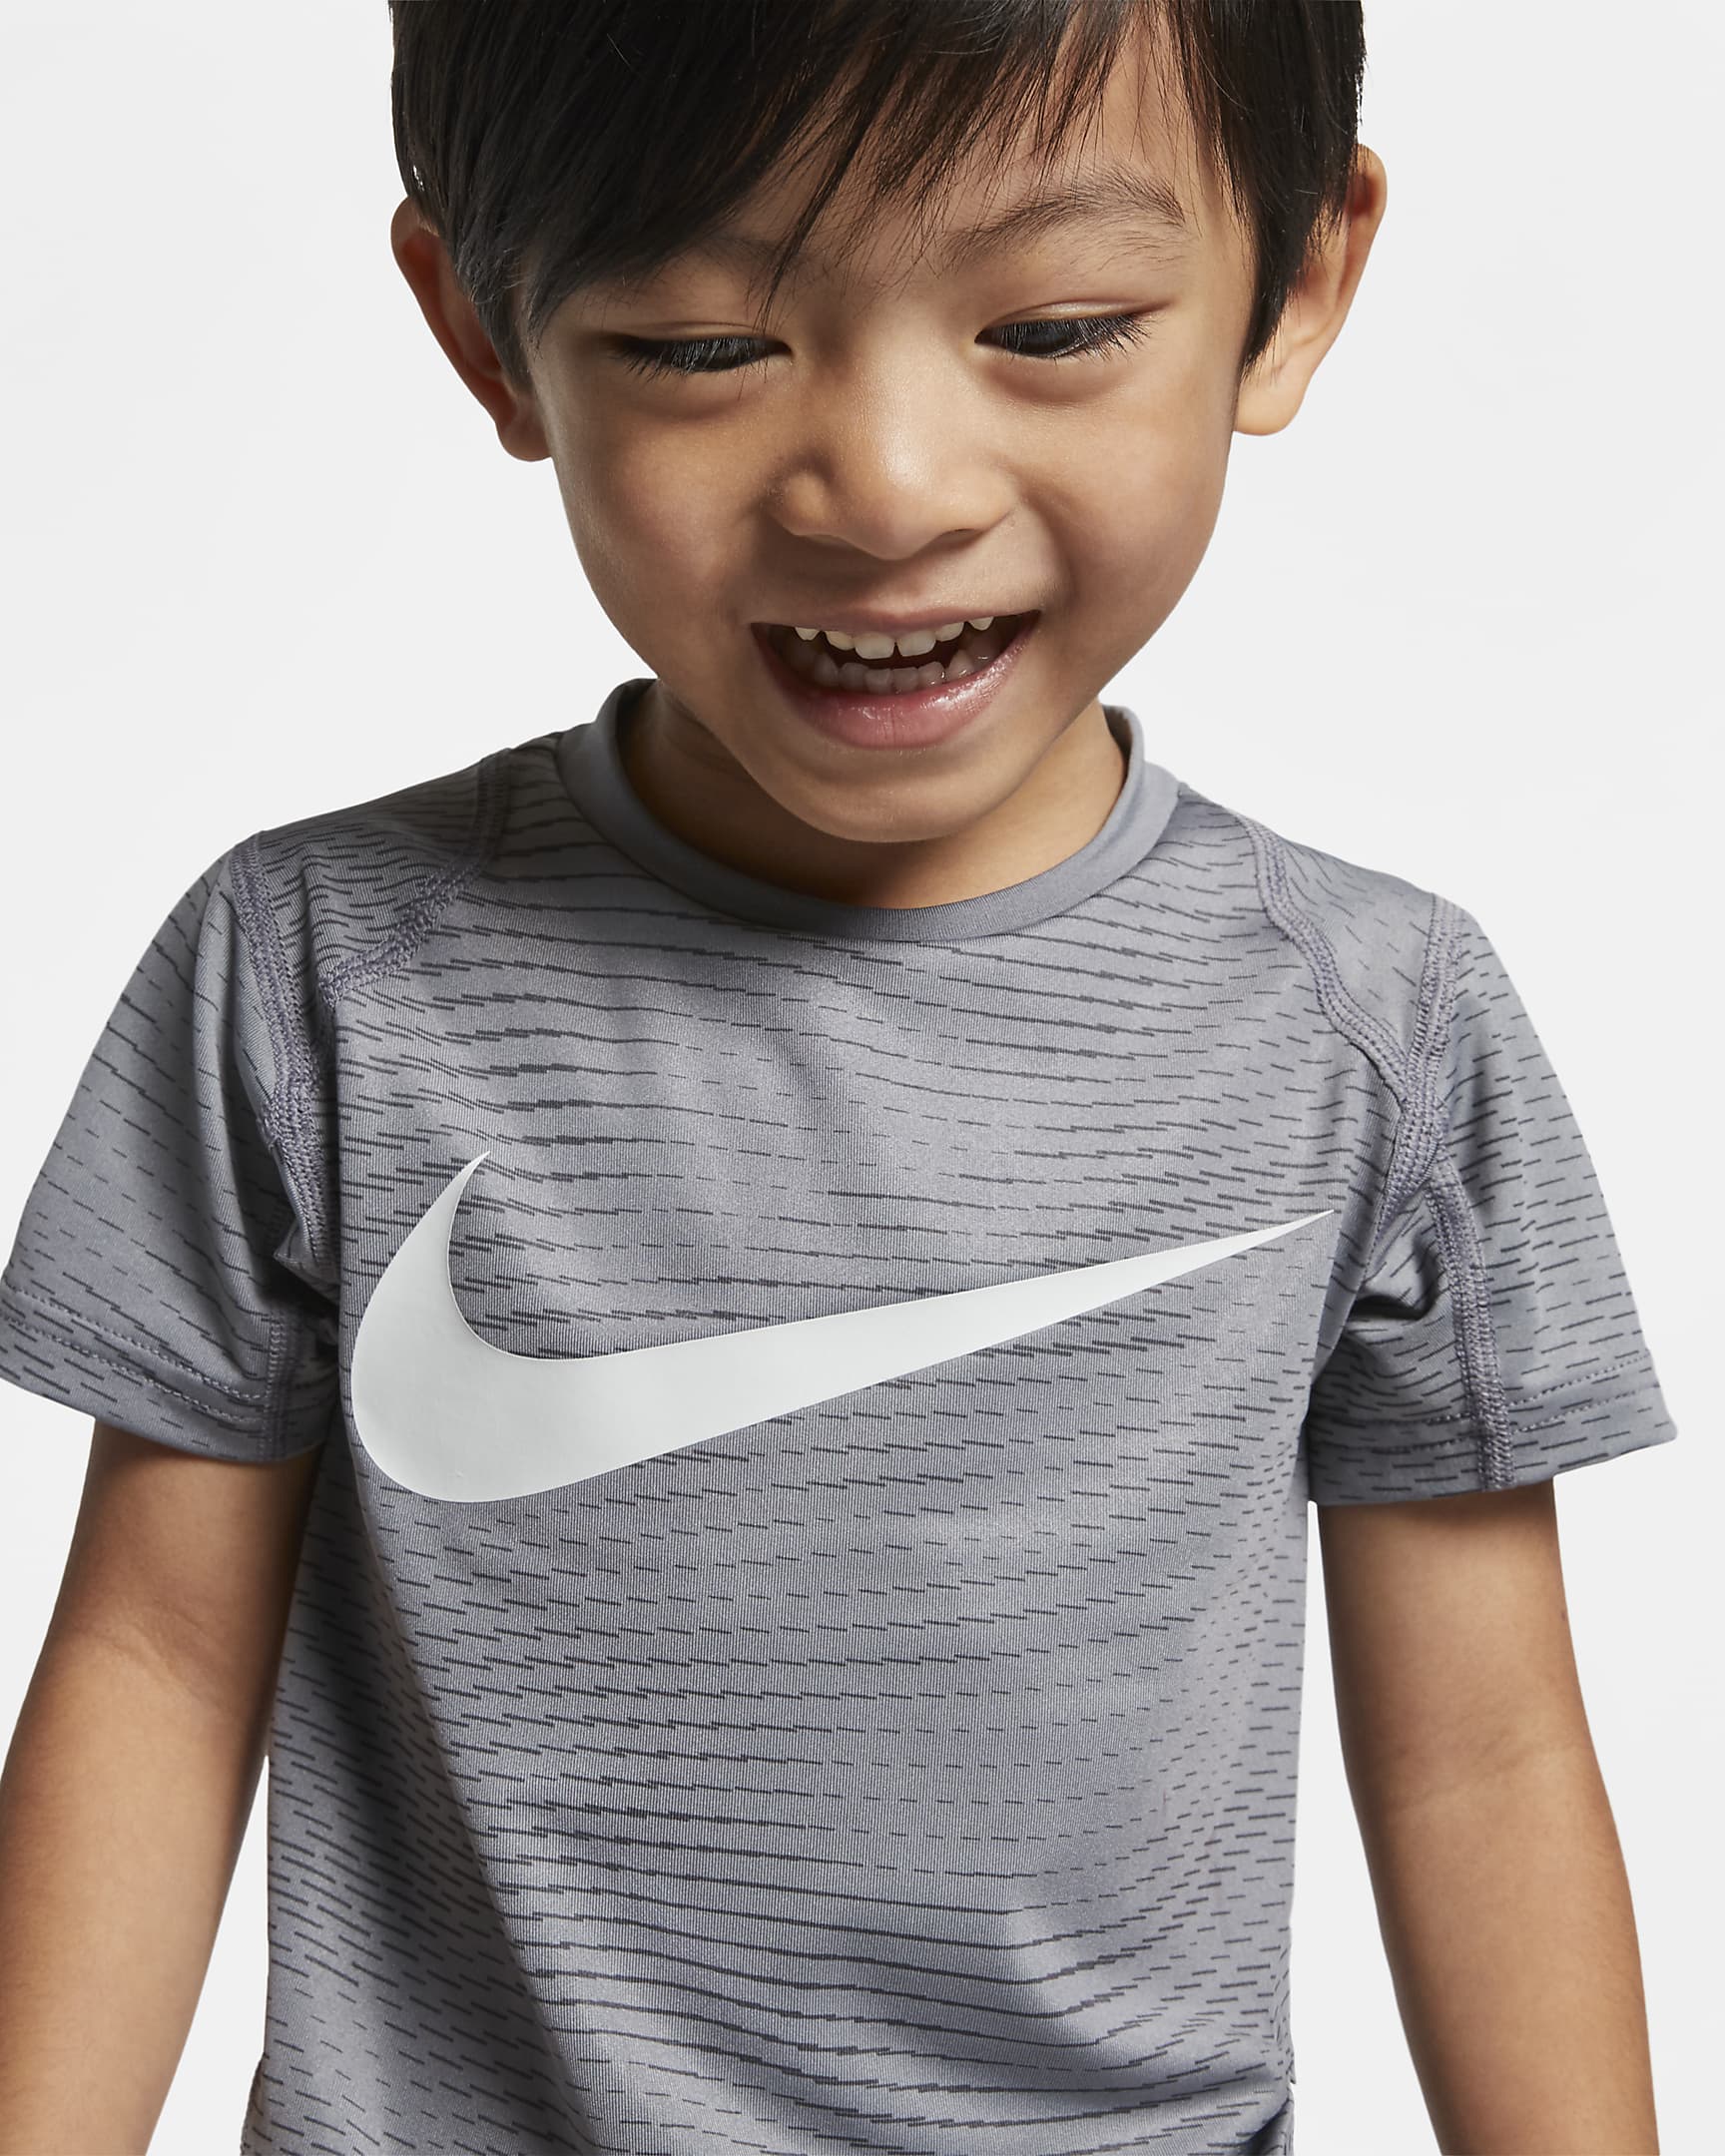 Nike Dri-FIT Little Kids' Base Layer Top. Nike.com